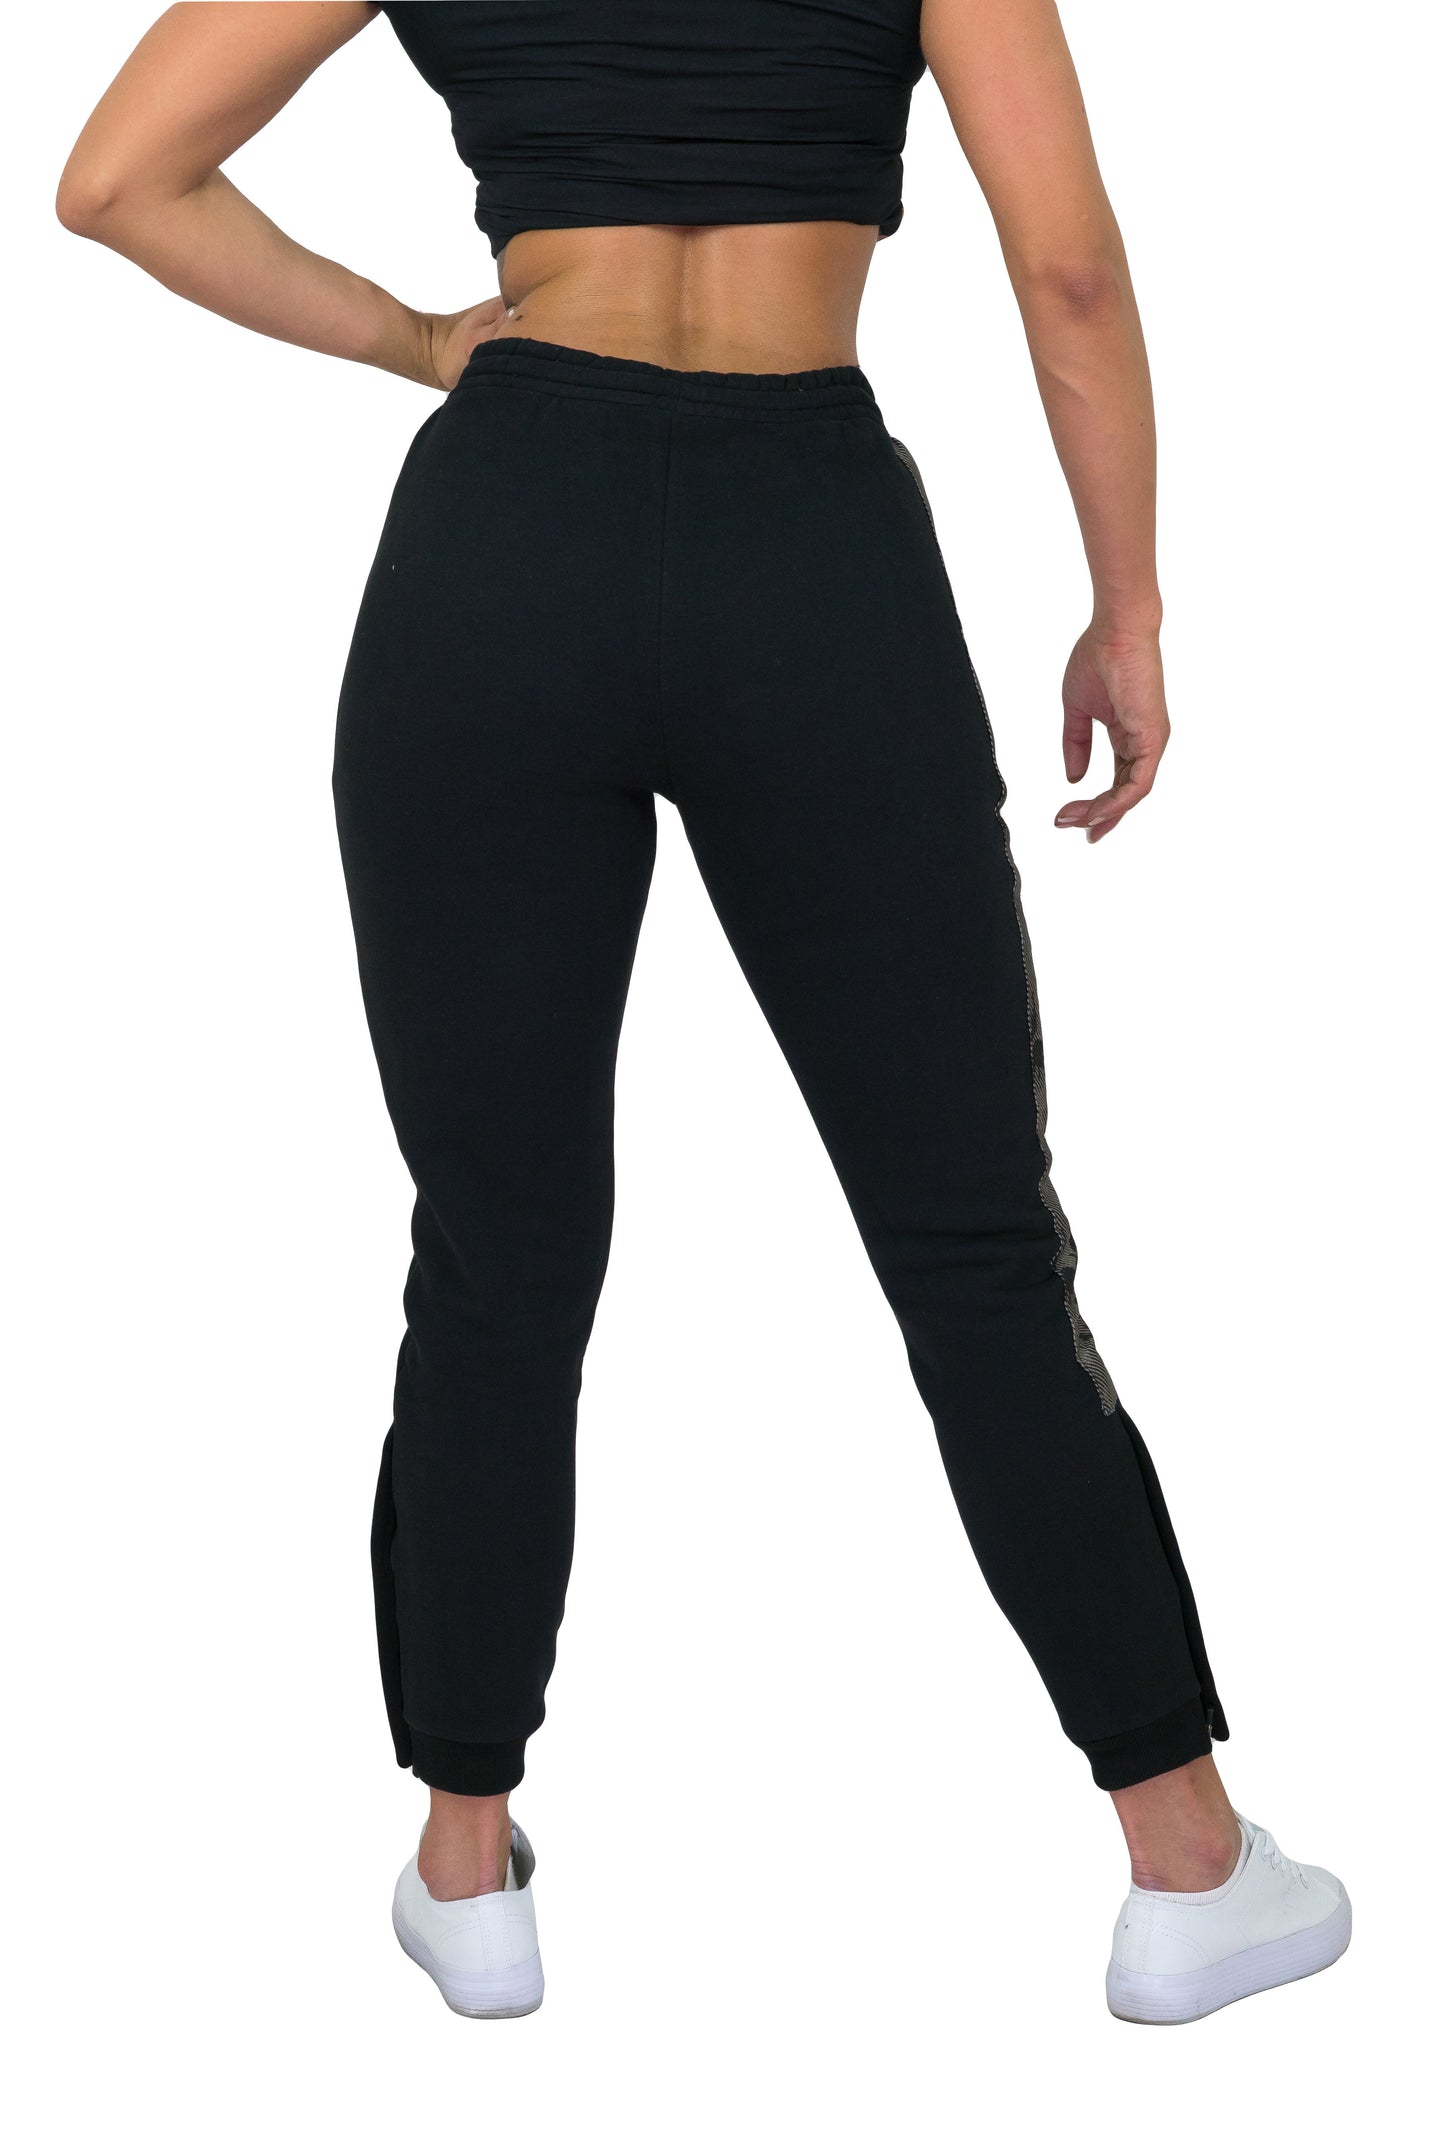 Women's sweatpants - black / camo